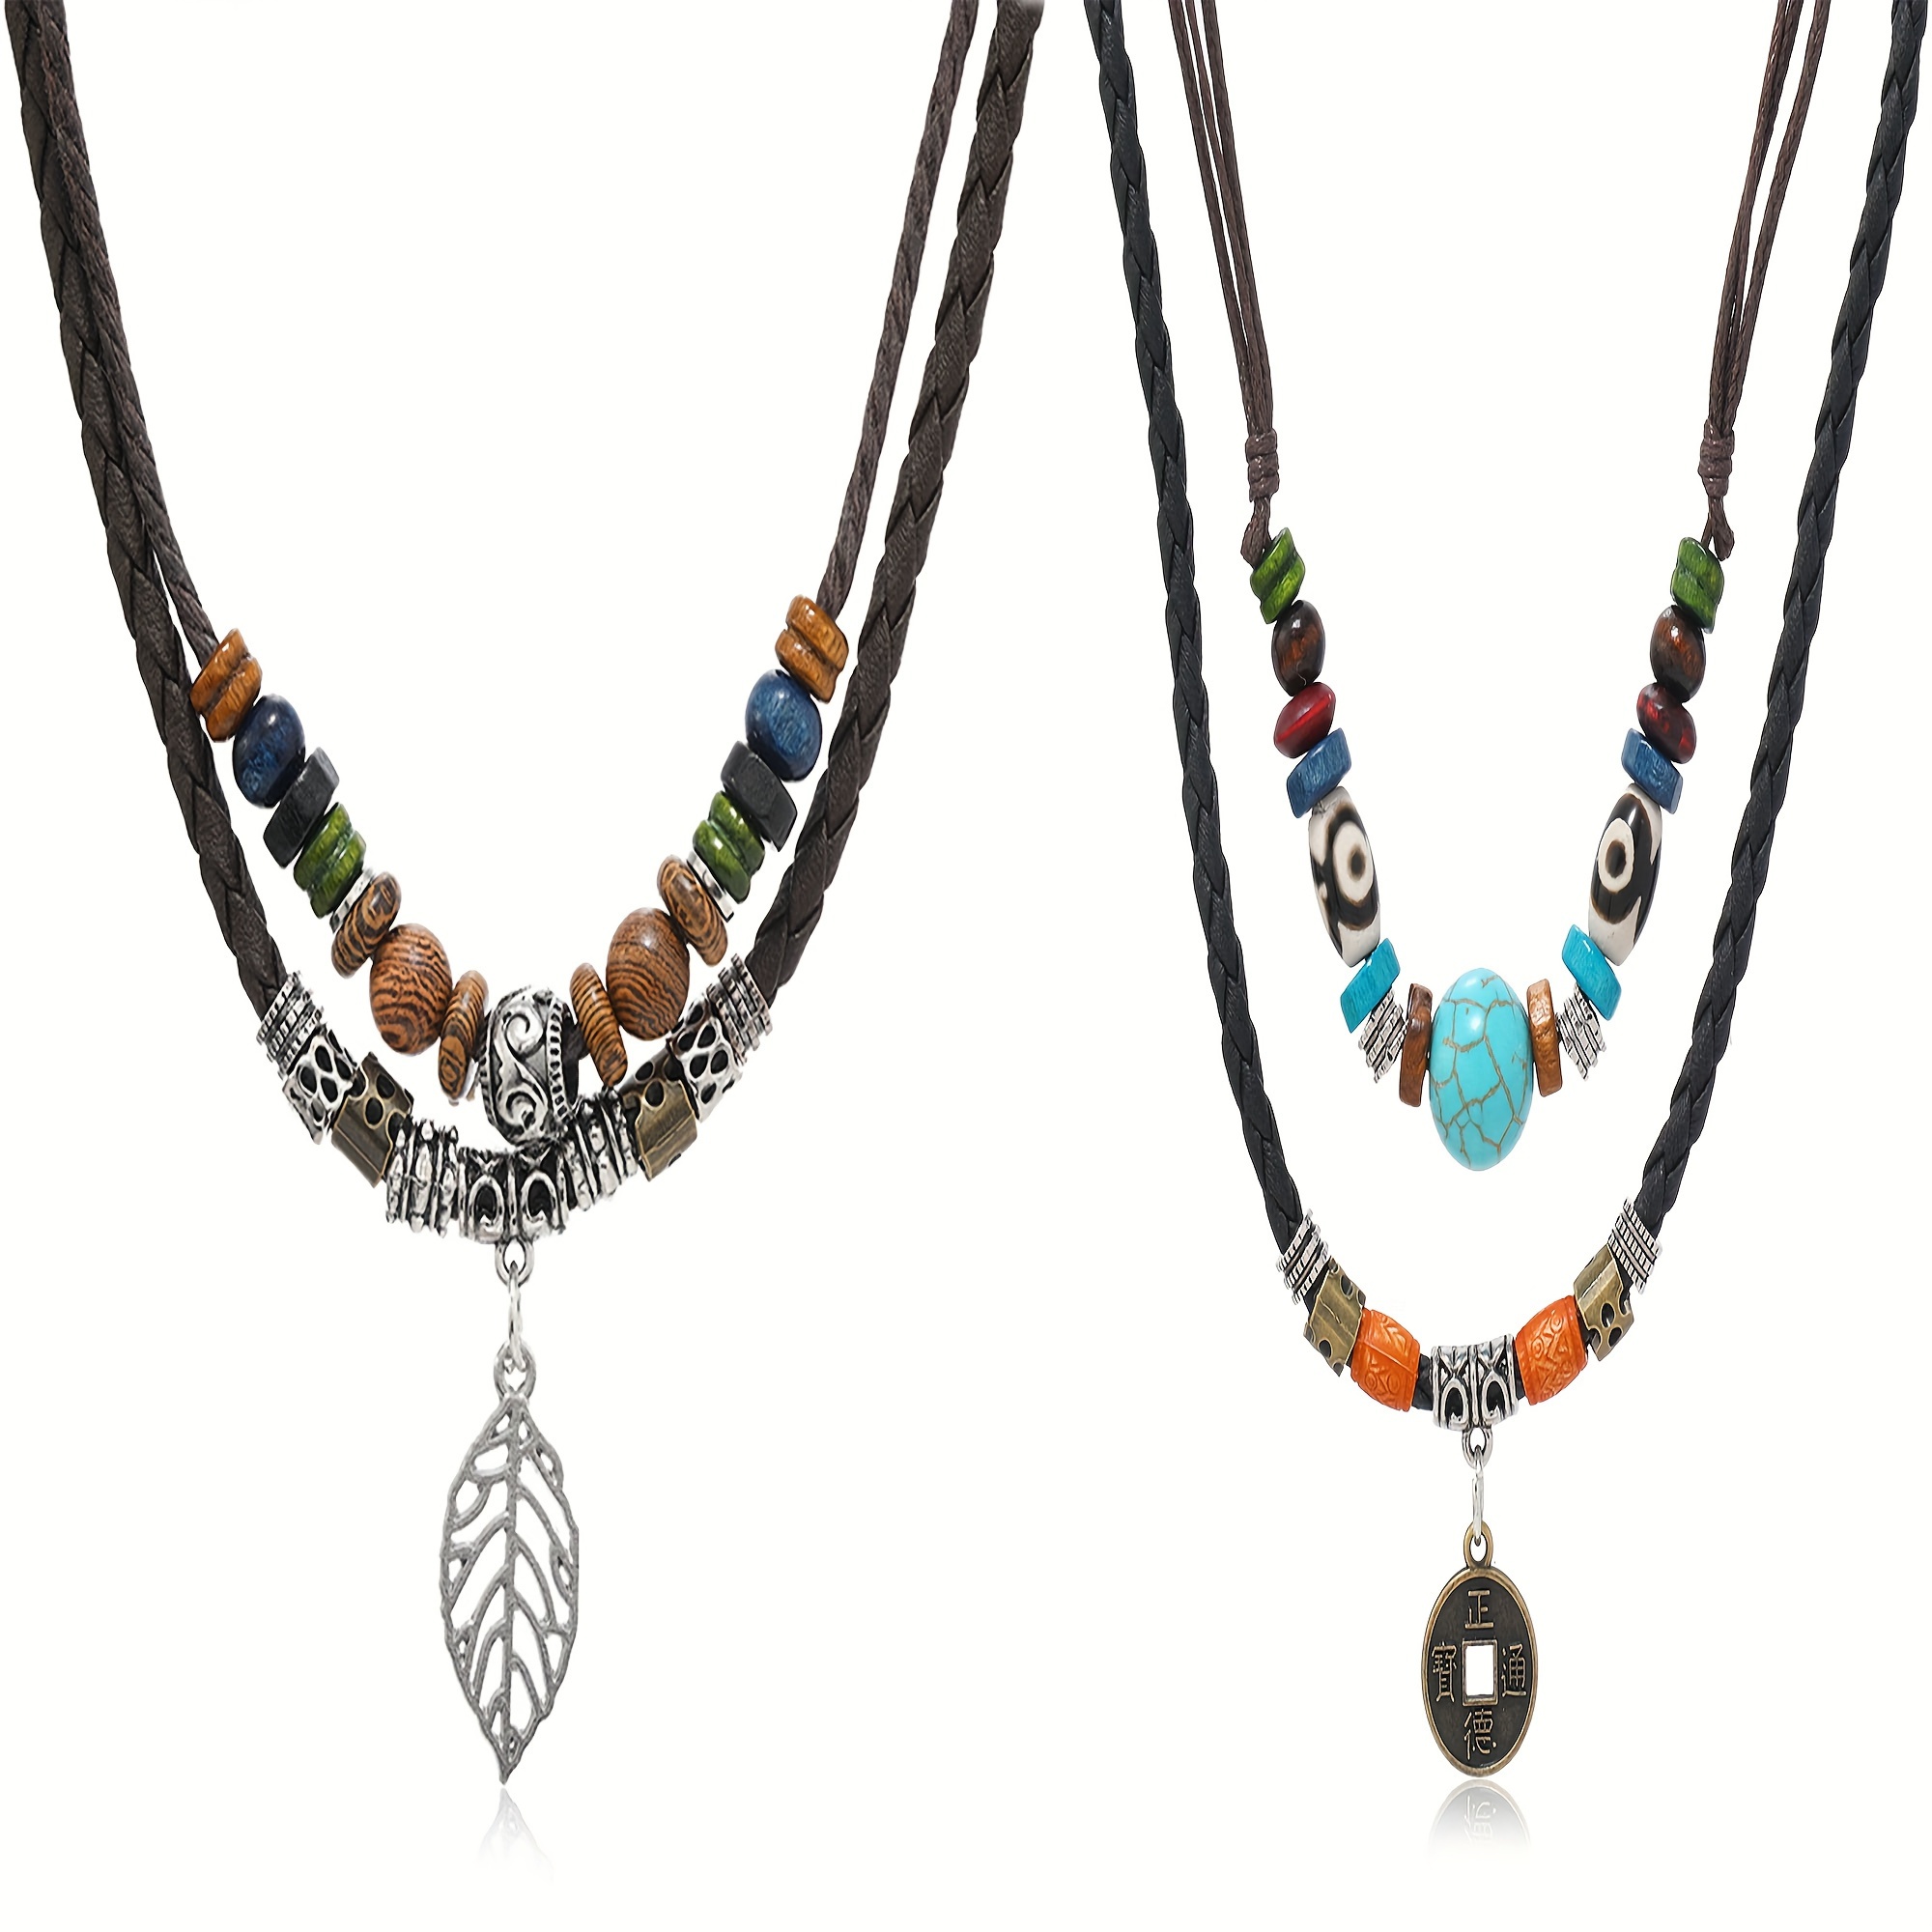 

2pcs/set Boho Styles For Woods Beads With China Cion And Leaf Pendant Necklace Set